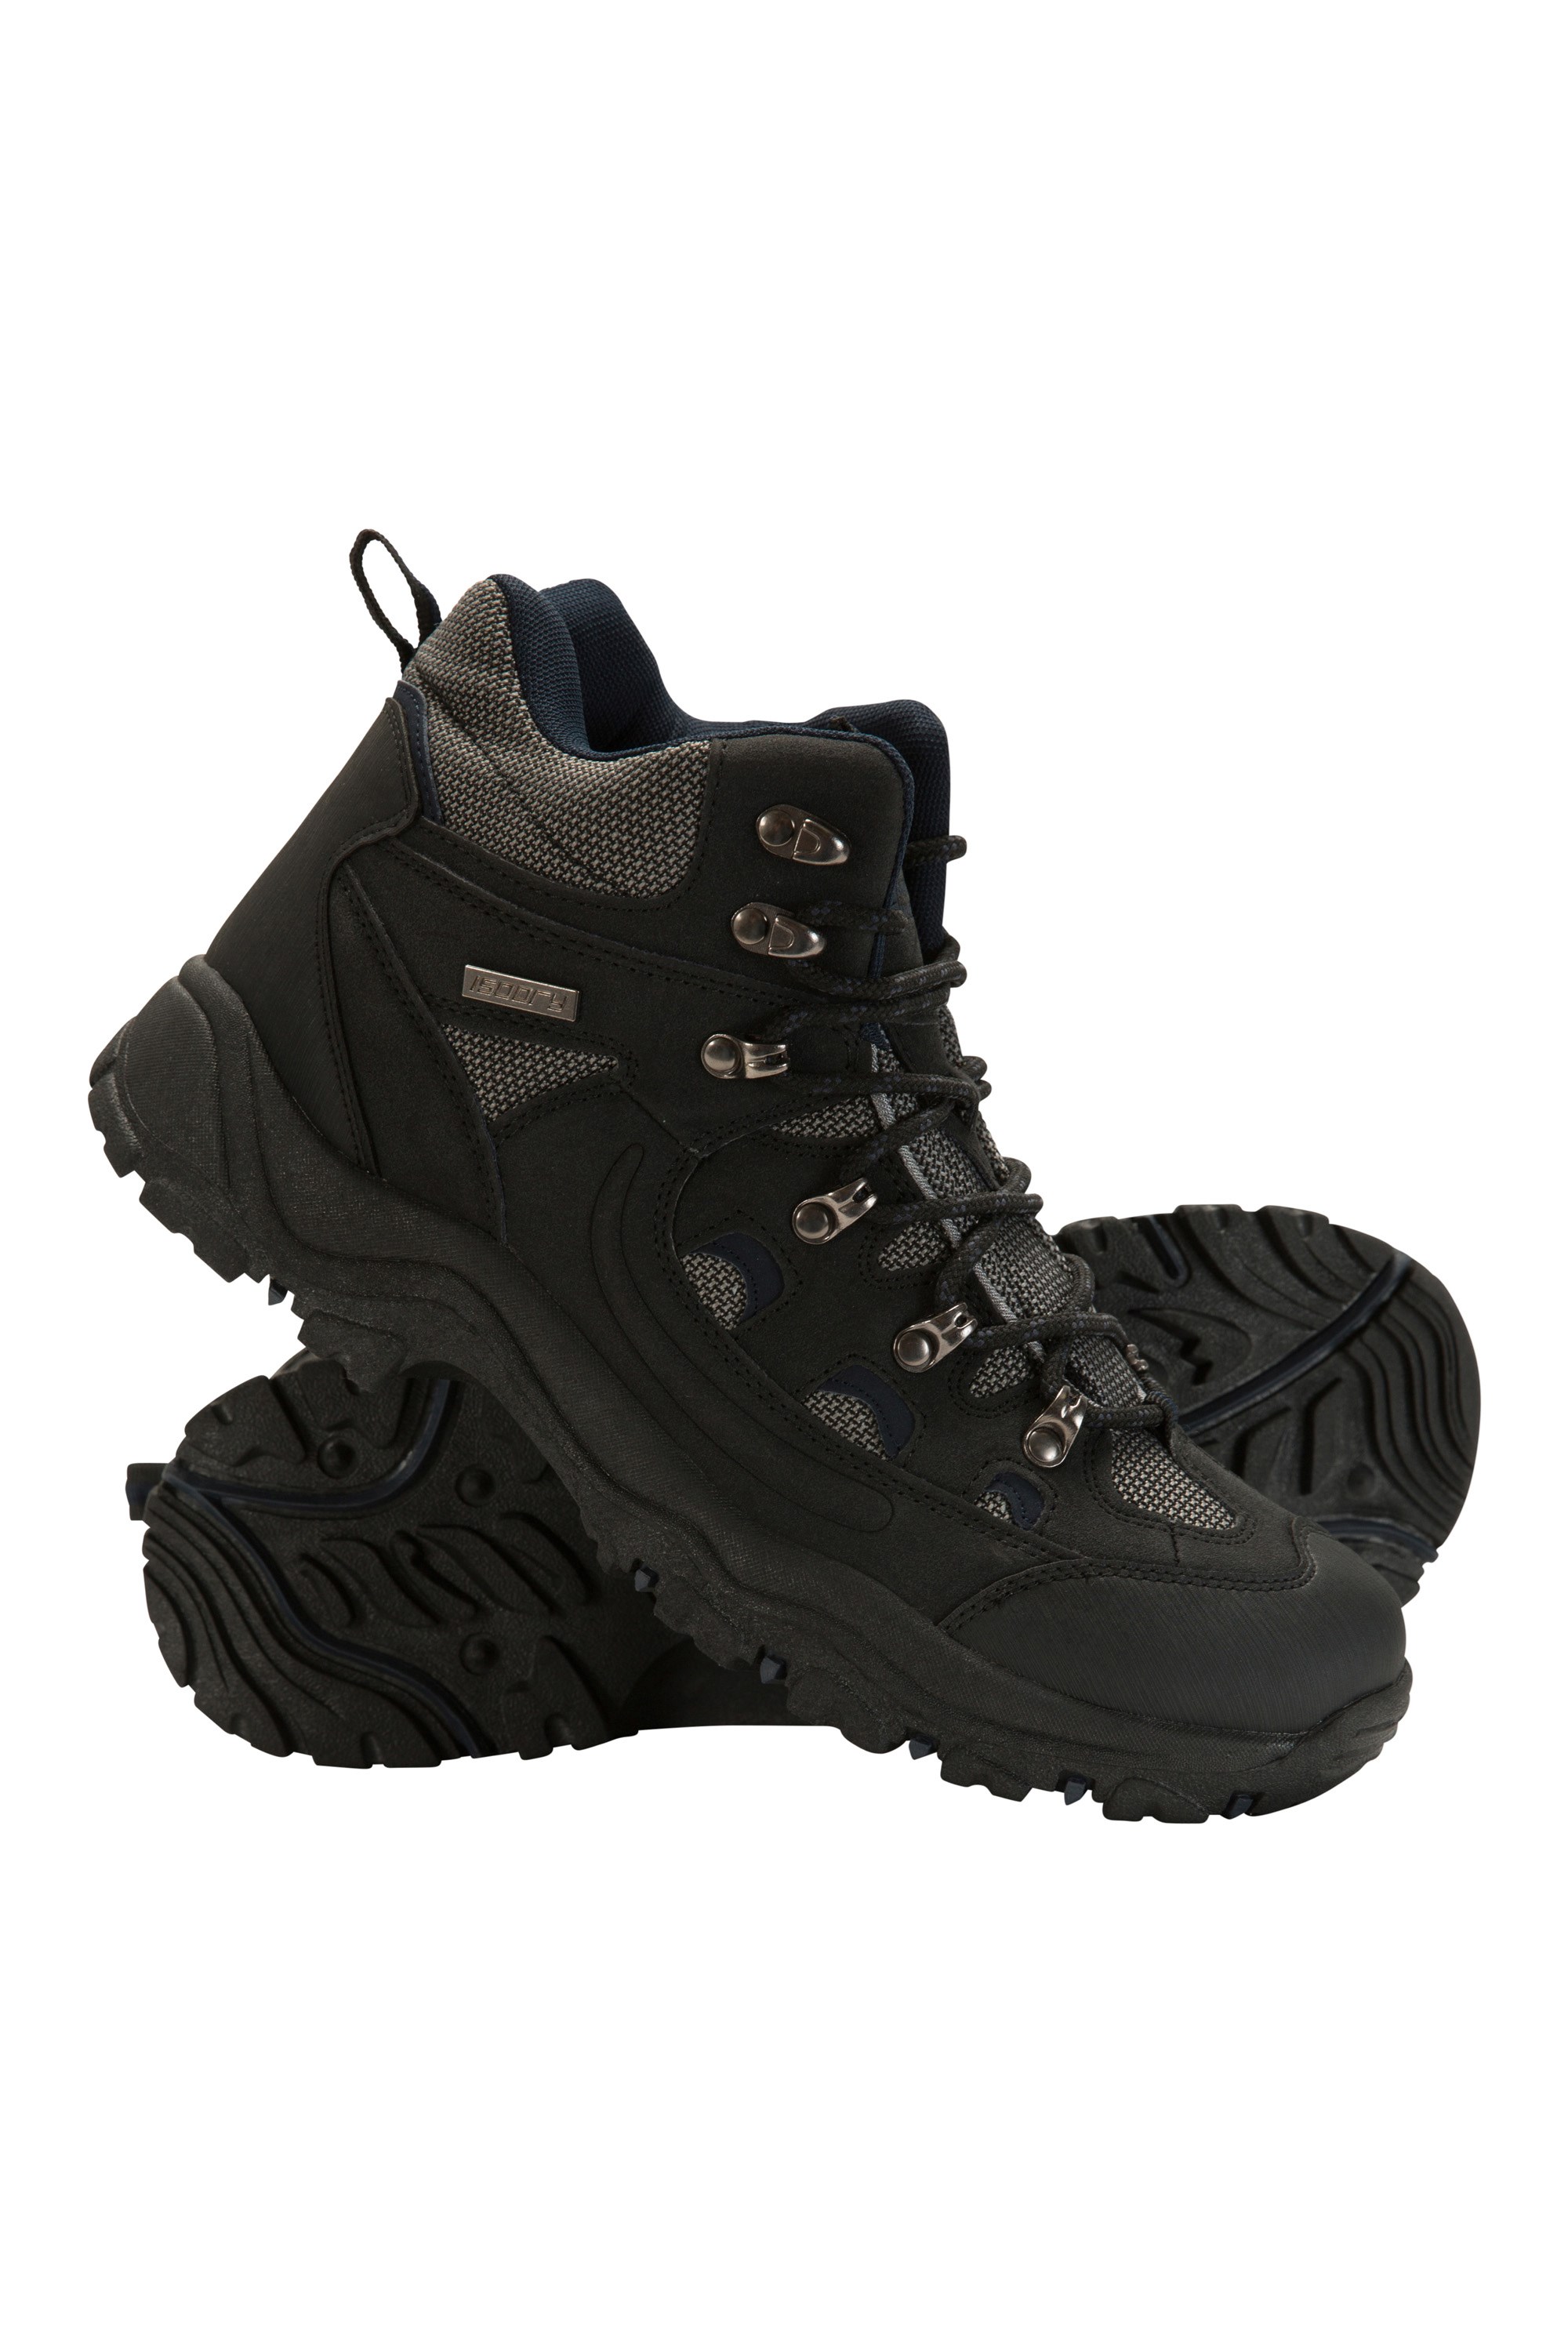 Mountain Warehouse Adventurer Mens Waterproof Boots Black